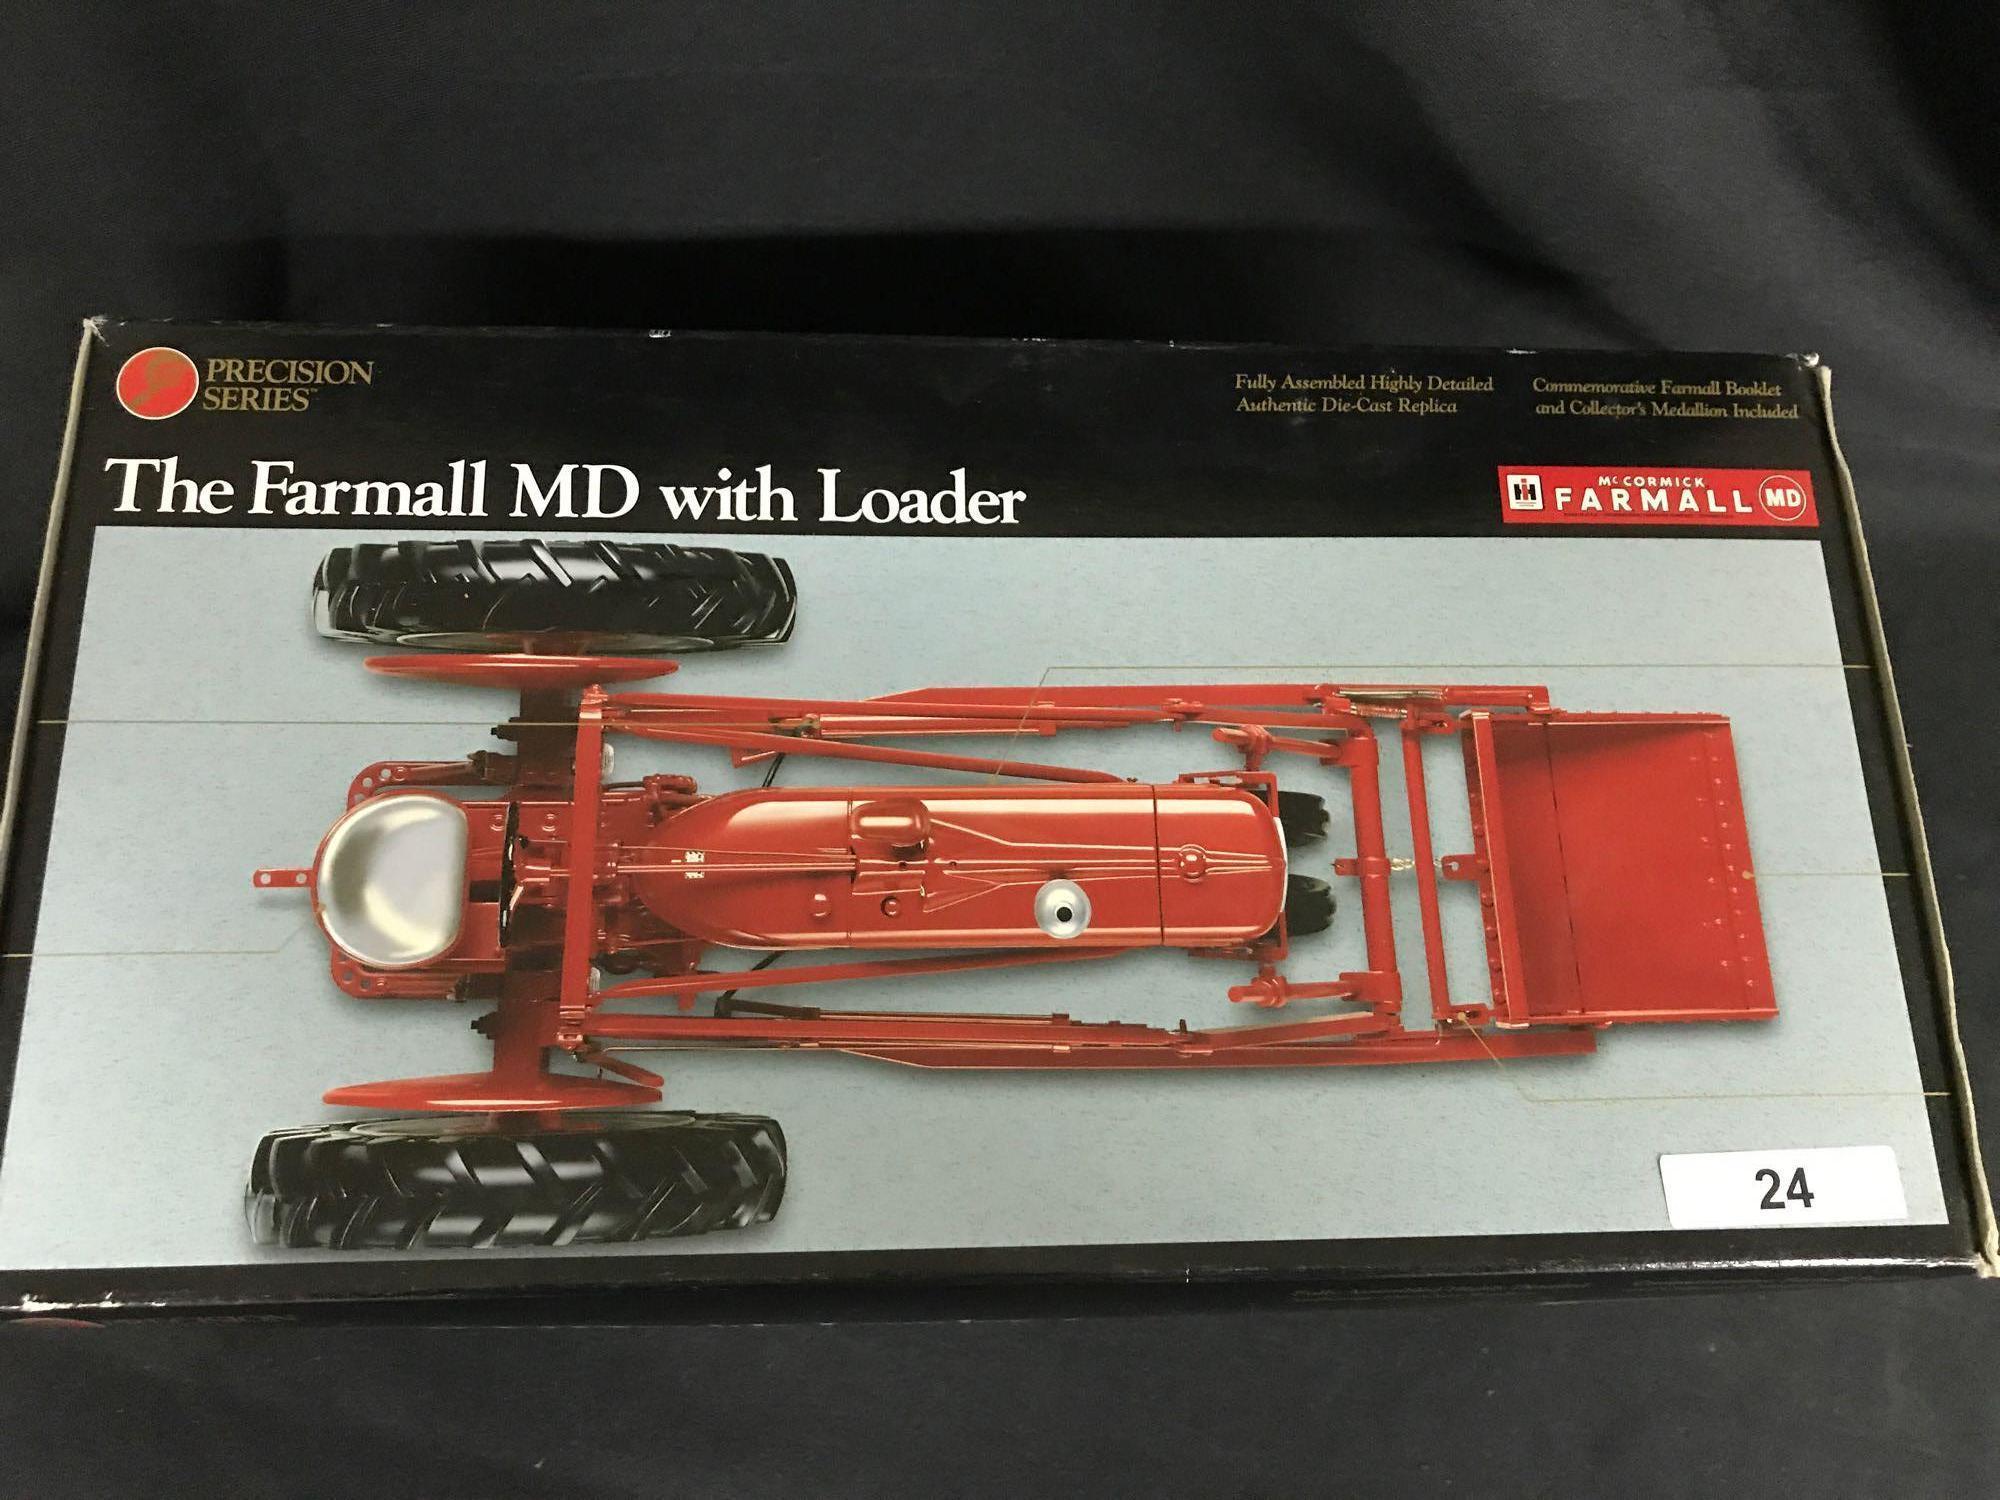 IH Farmall "MD with Loader" Precision Series